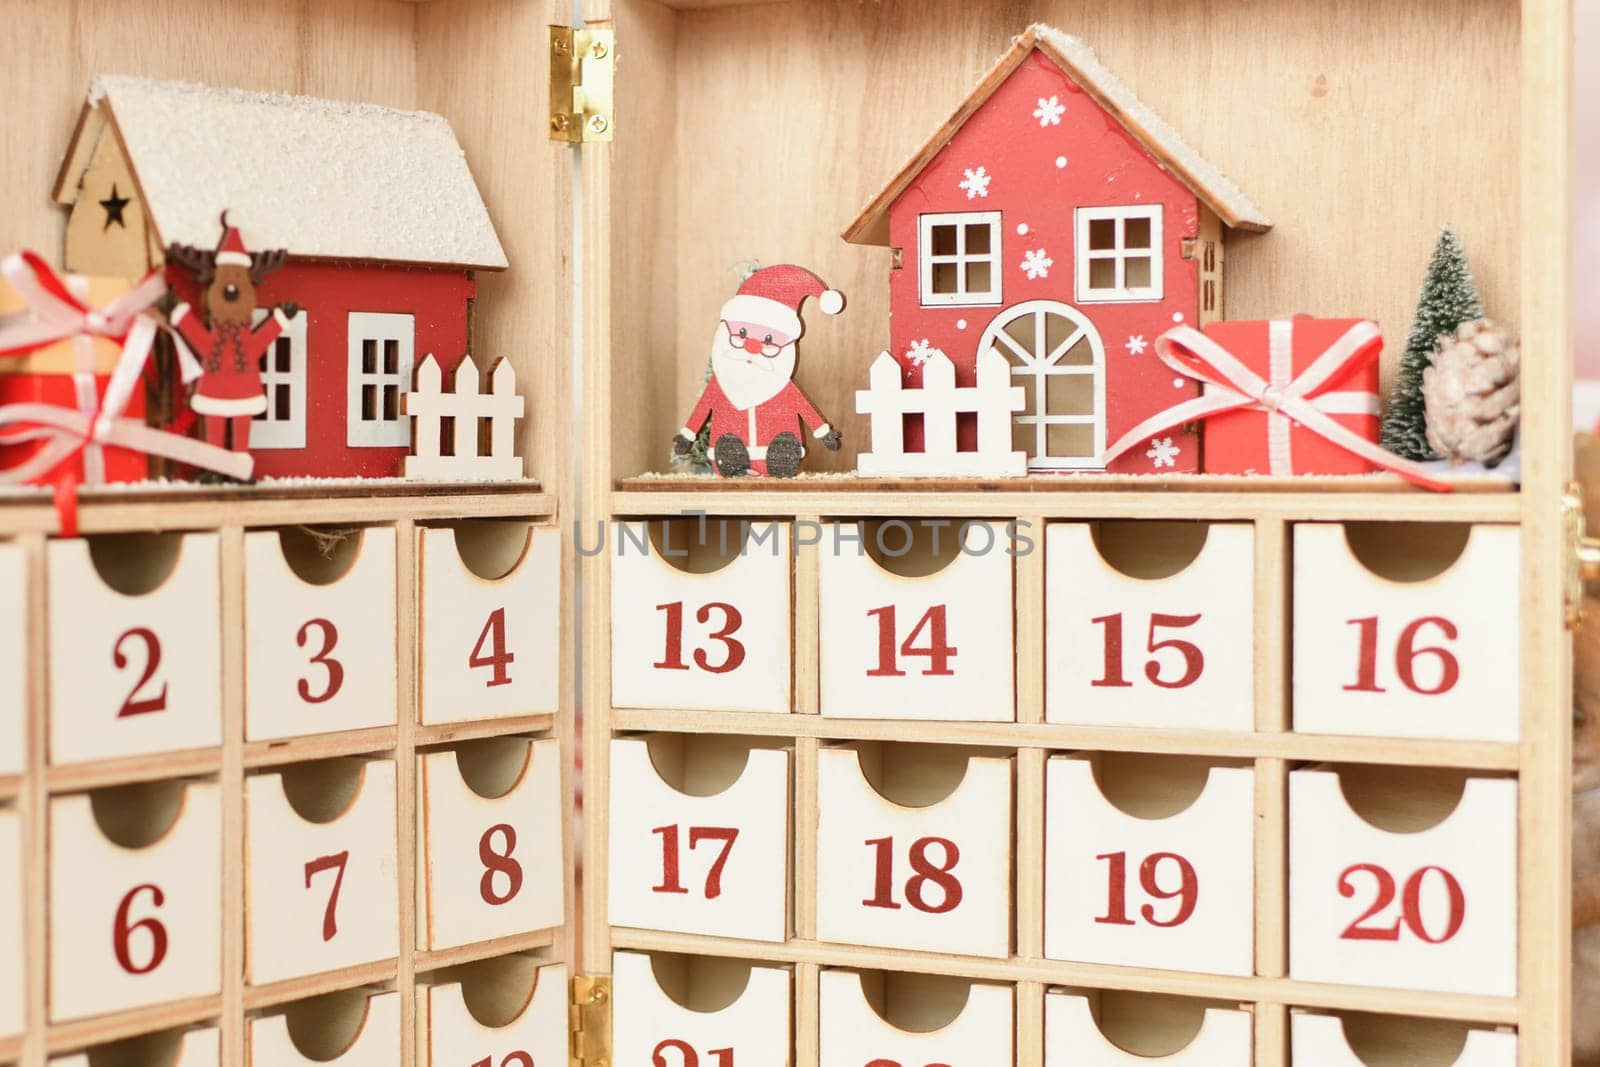 The advent calendar with Santa Claus by Godi